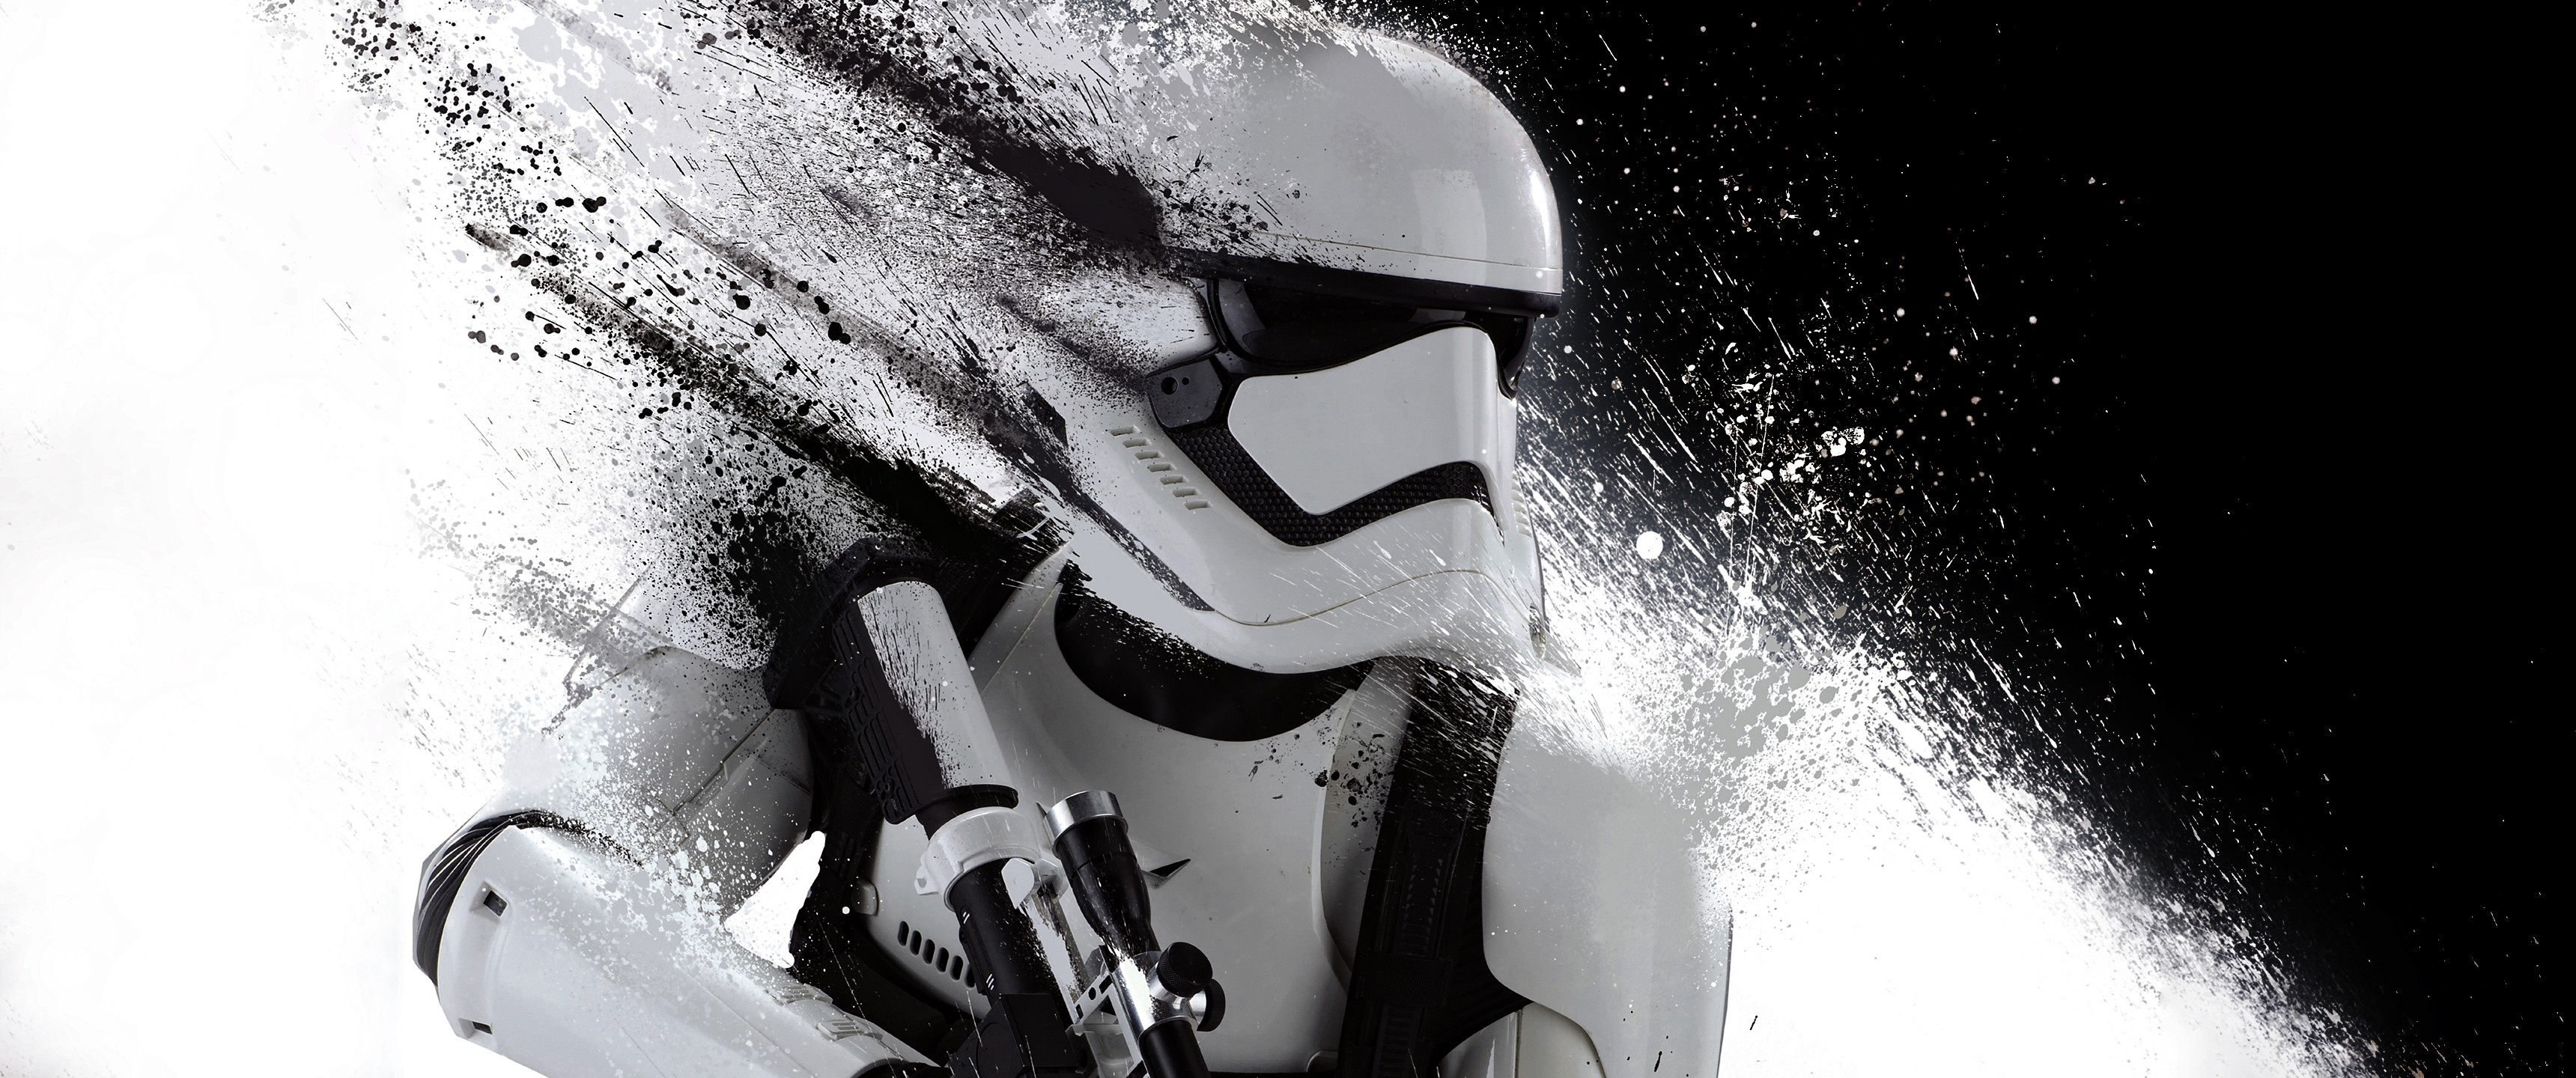 General 3440x1440 Star Wars Star Wars: The Force Awakens blaster movies First Order Trooper digital art